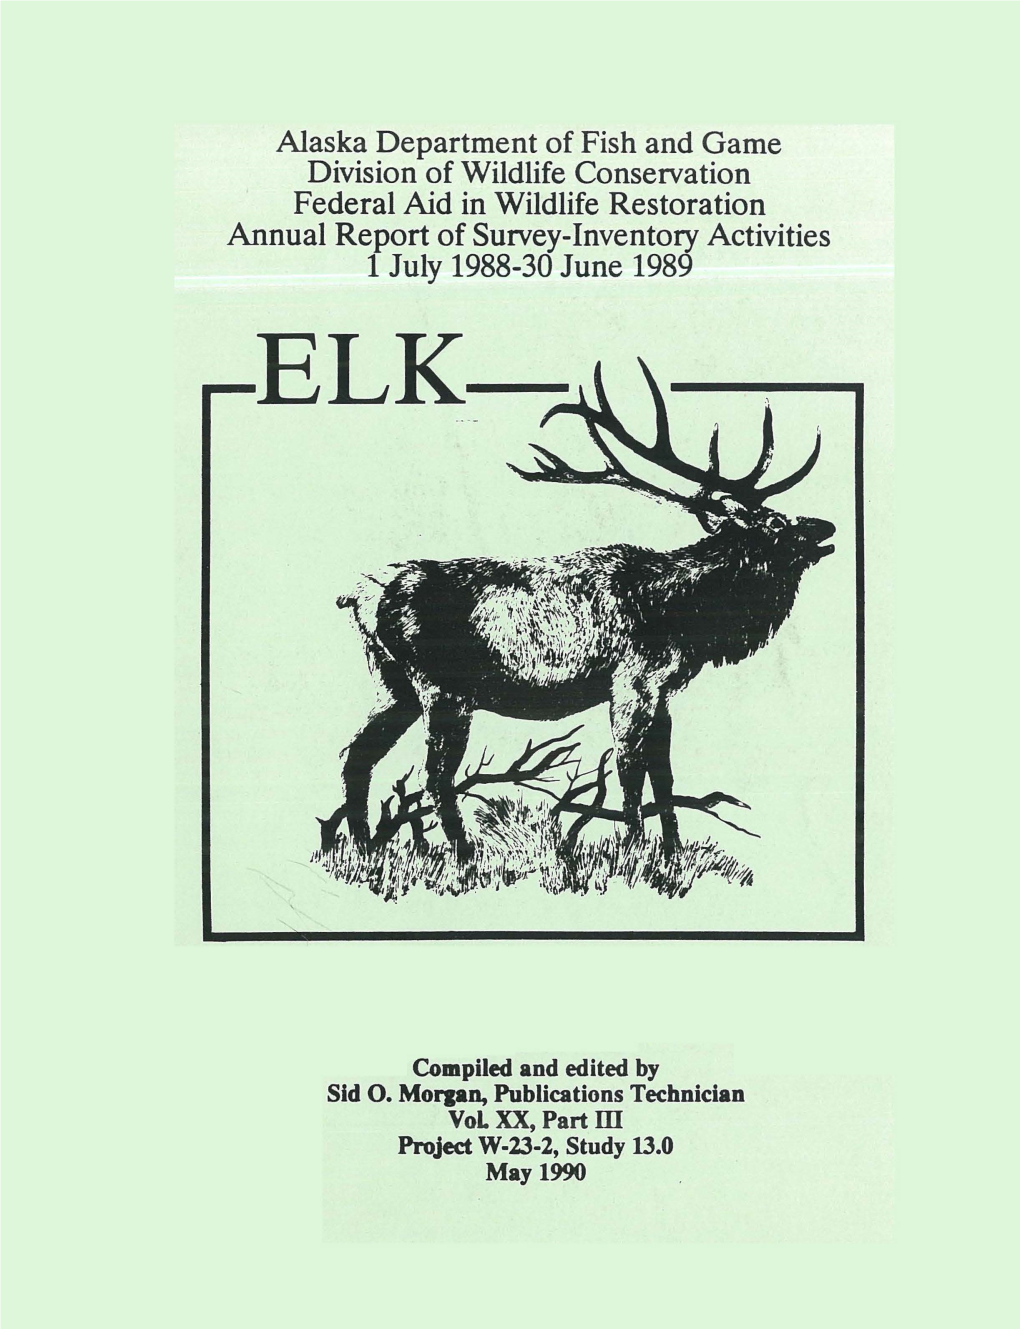 Annual Report of Survey-Inventory Activities 1 July 1988-30 June 1989 .....ELK